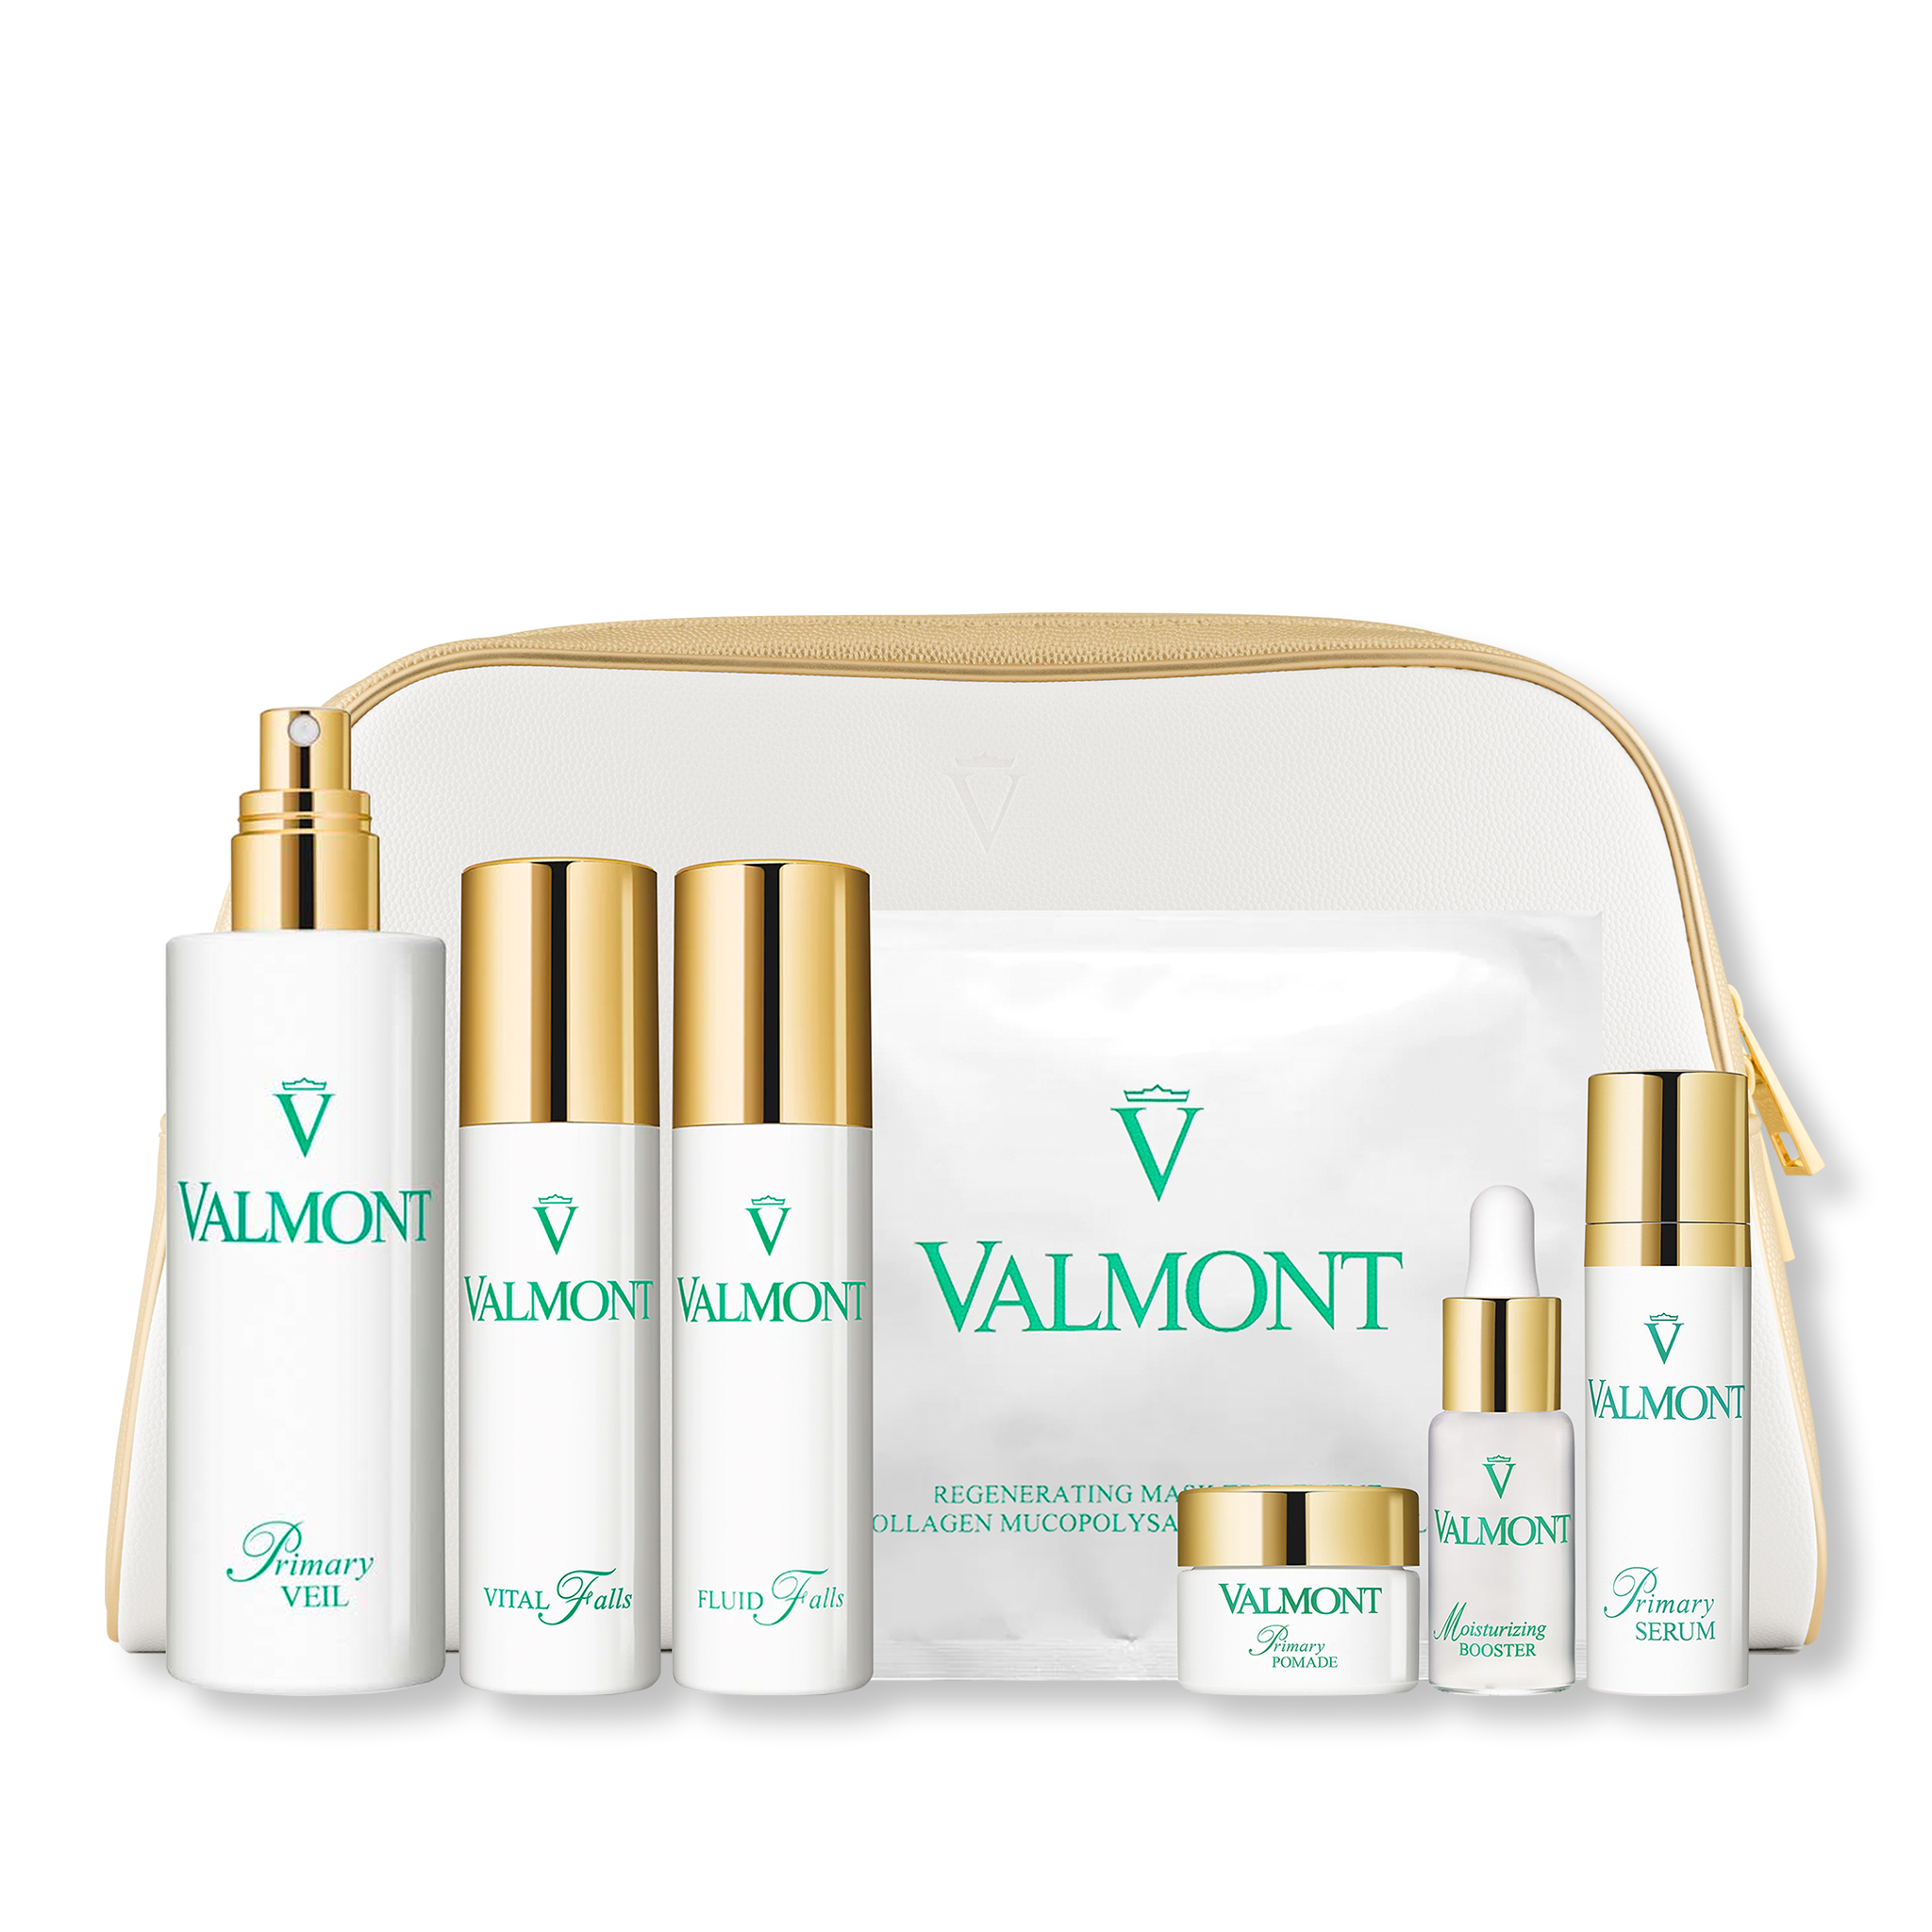 Valmont Luxury Set ($805 Value)